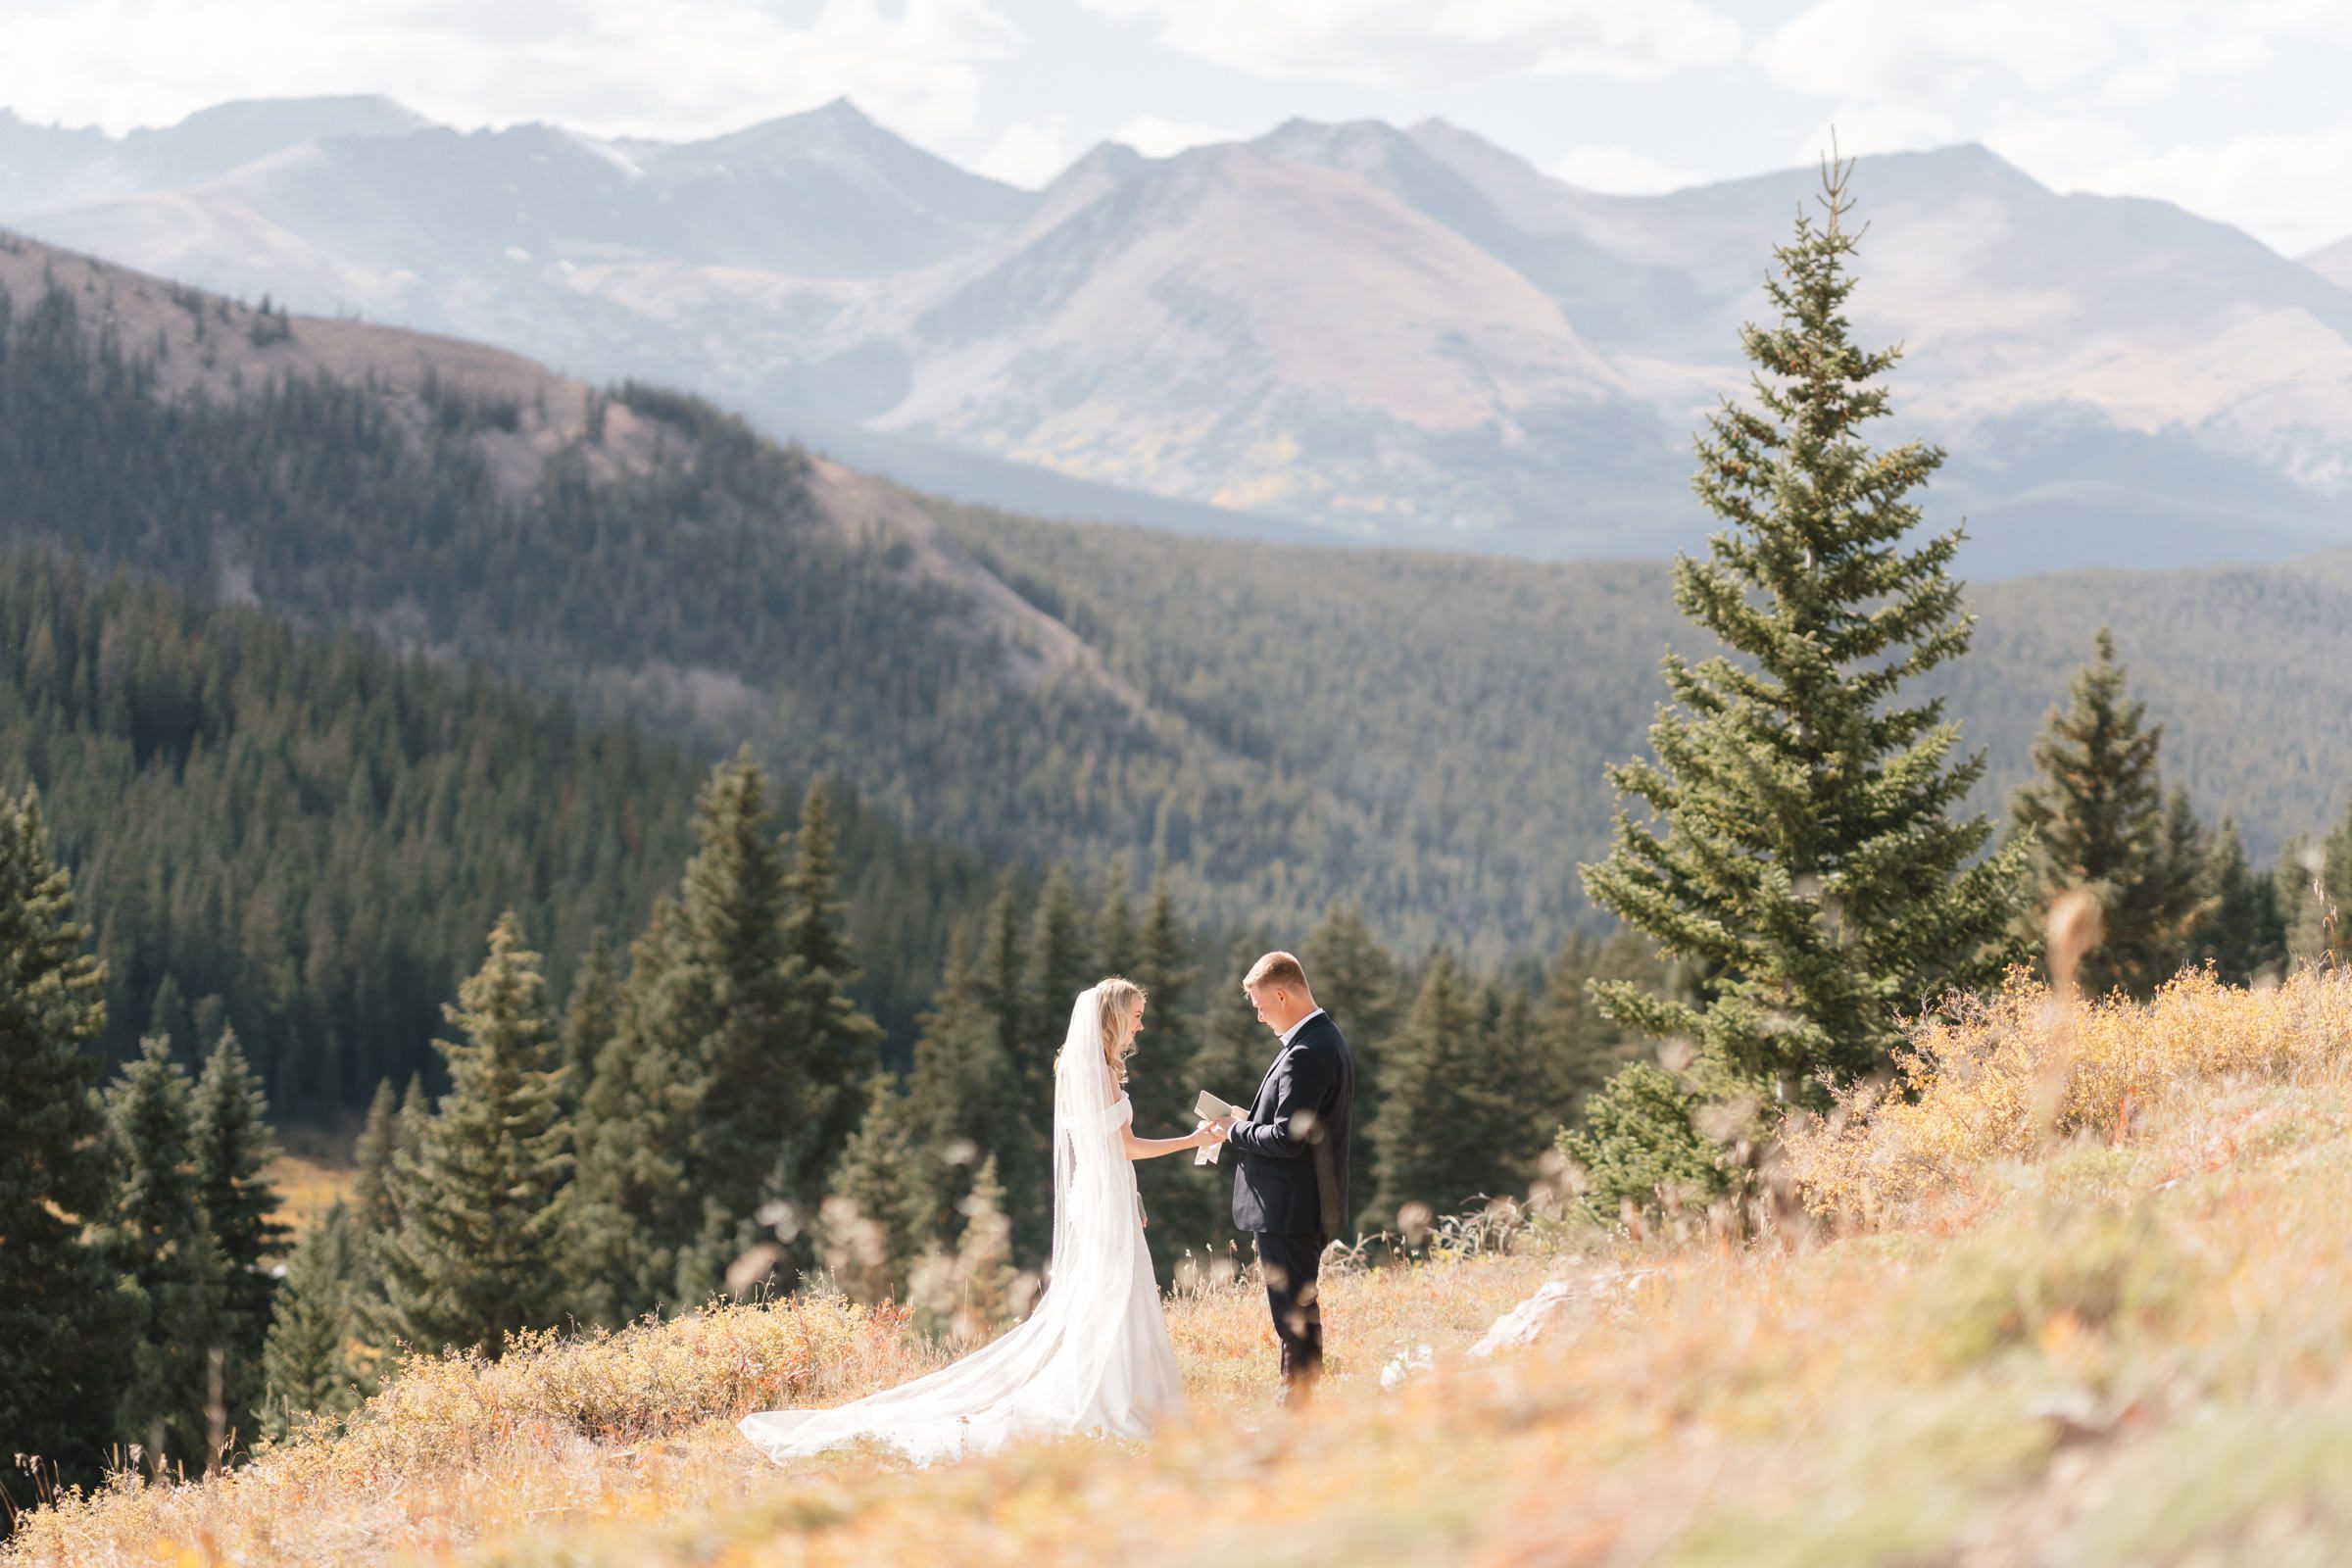 Couple exchanges private vows on Boreas Pass in Breckenridge Colorado.